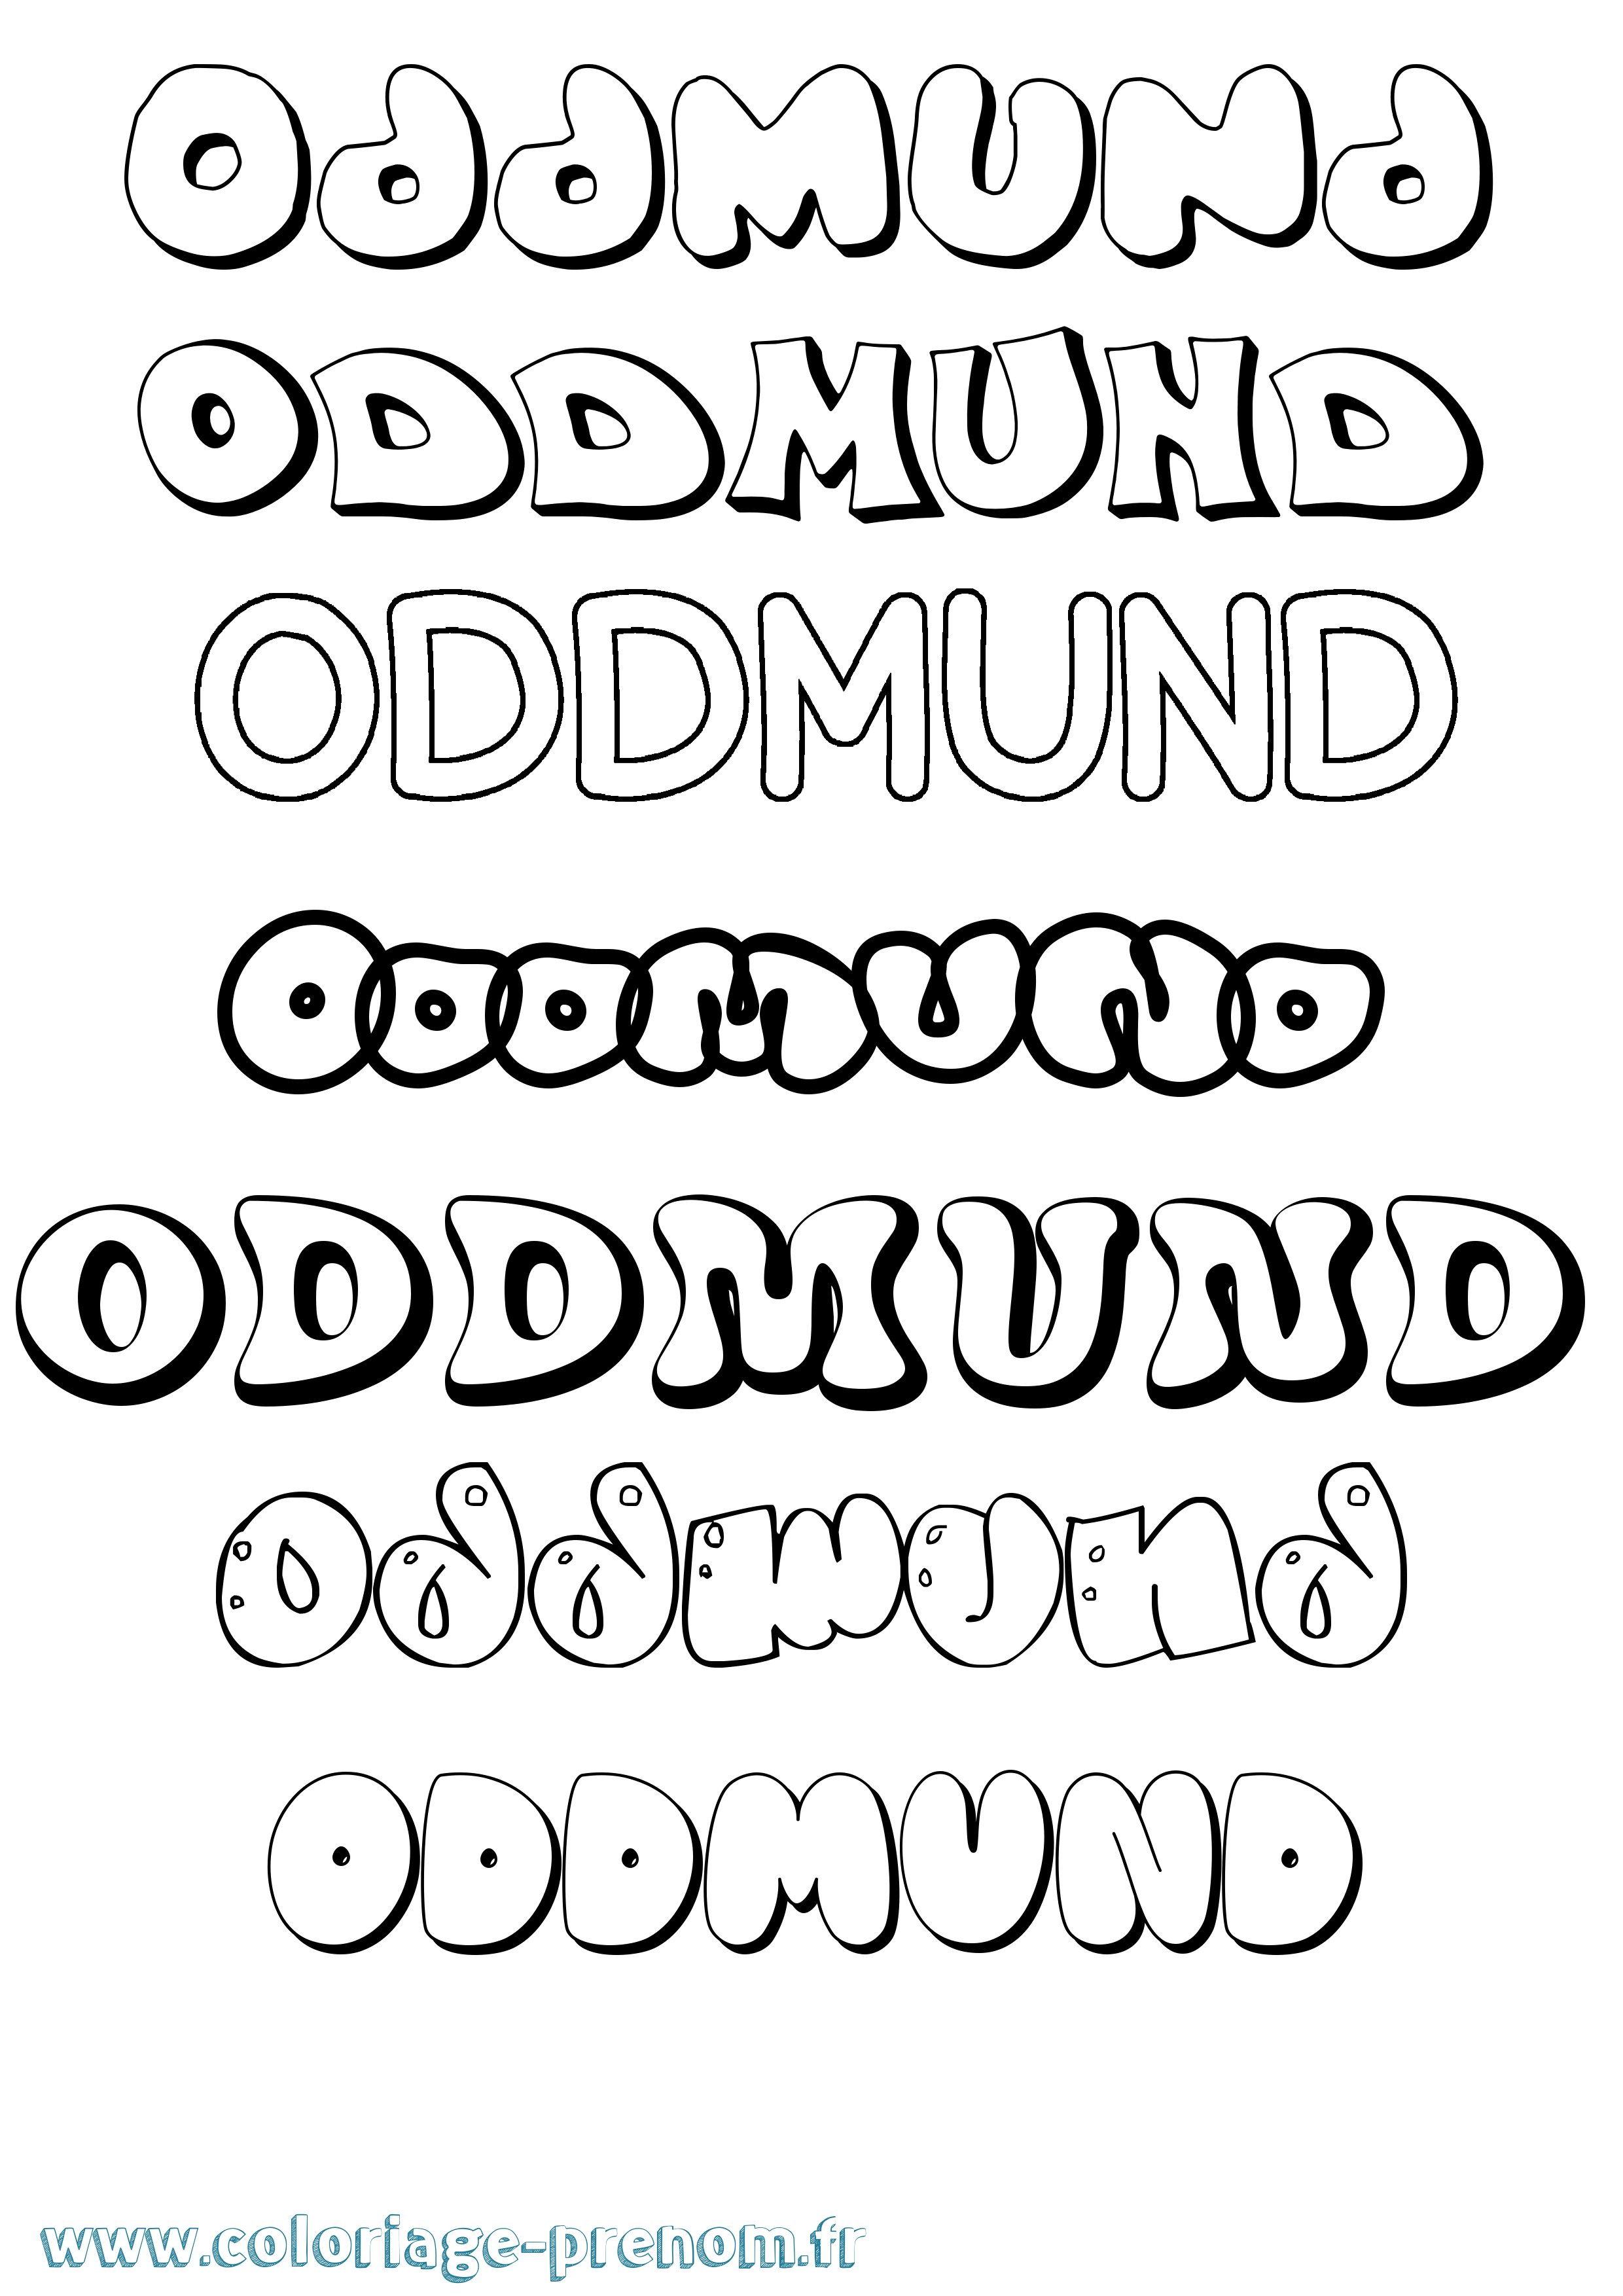 Coloriage prénom Oddmund Bubble